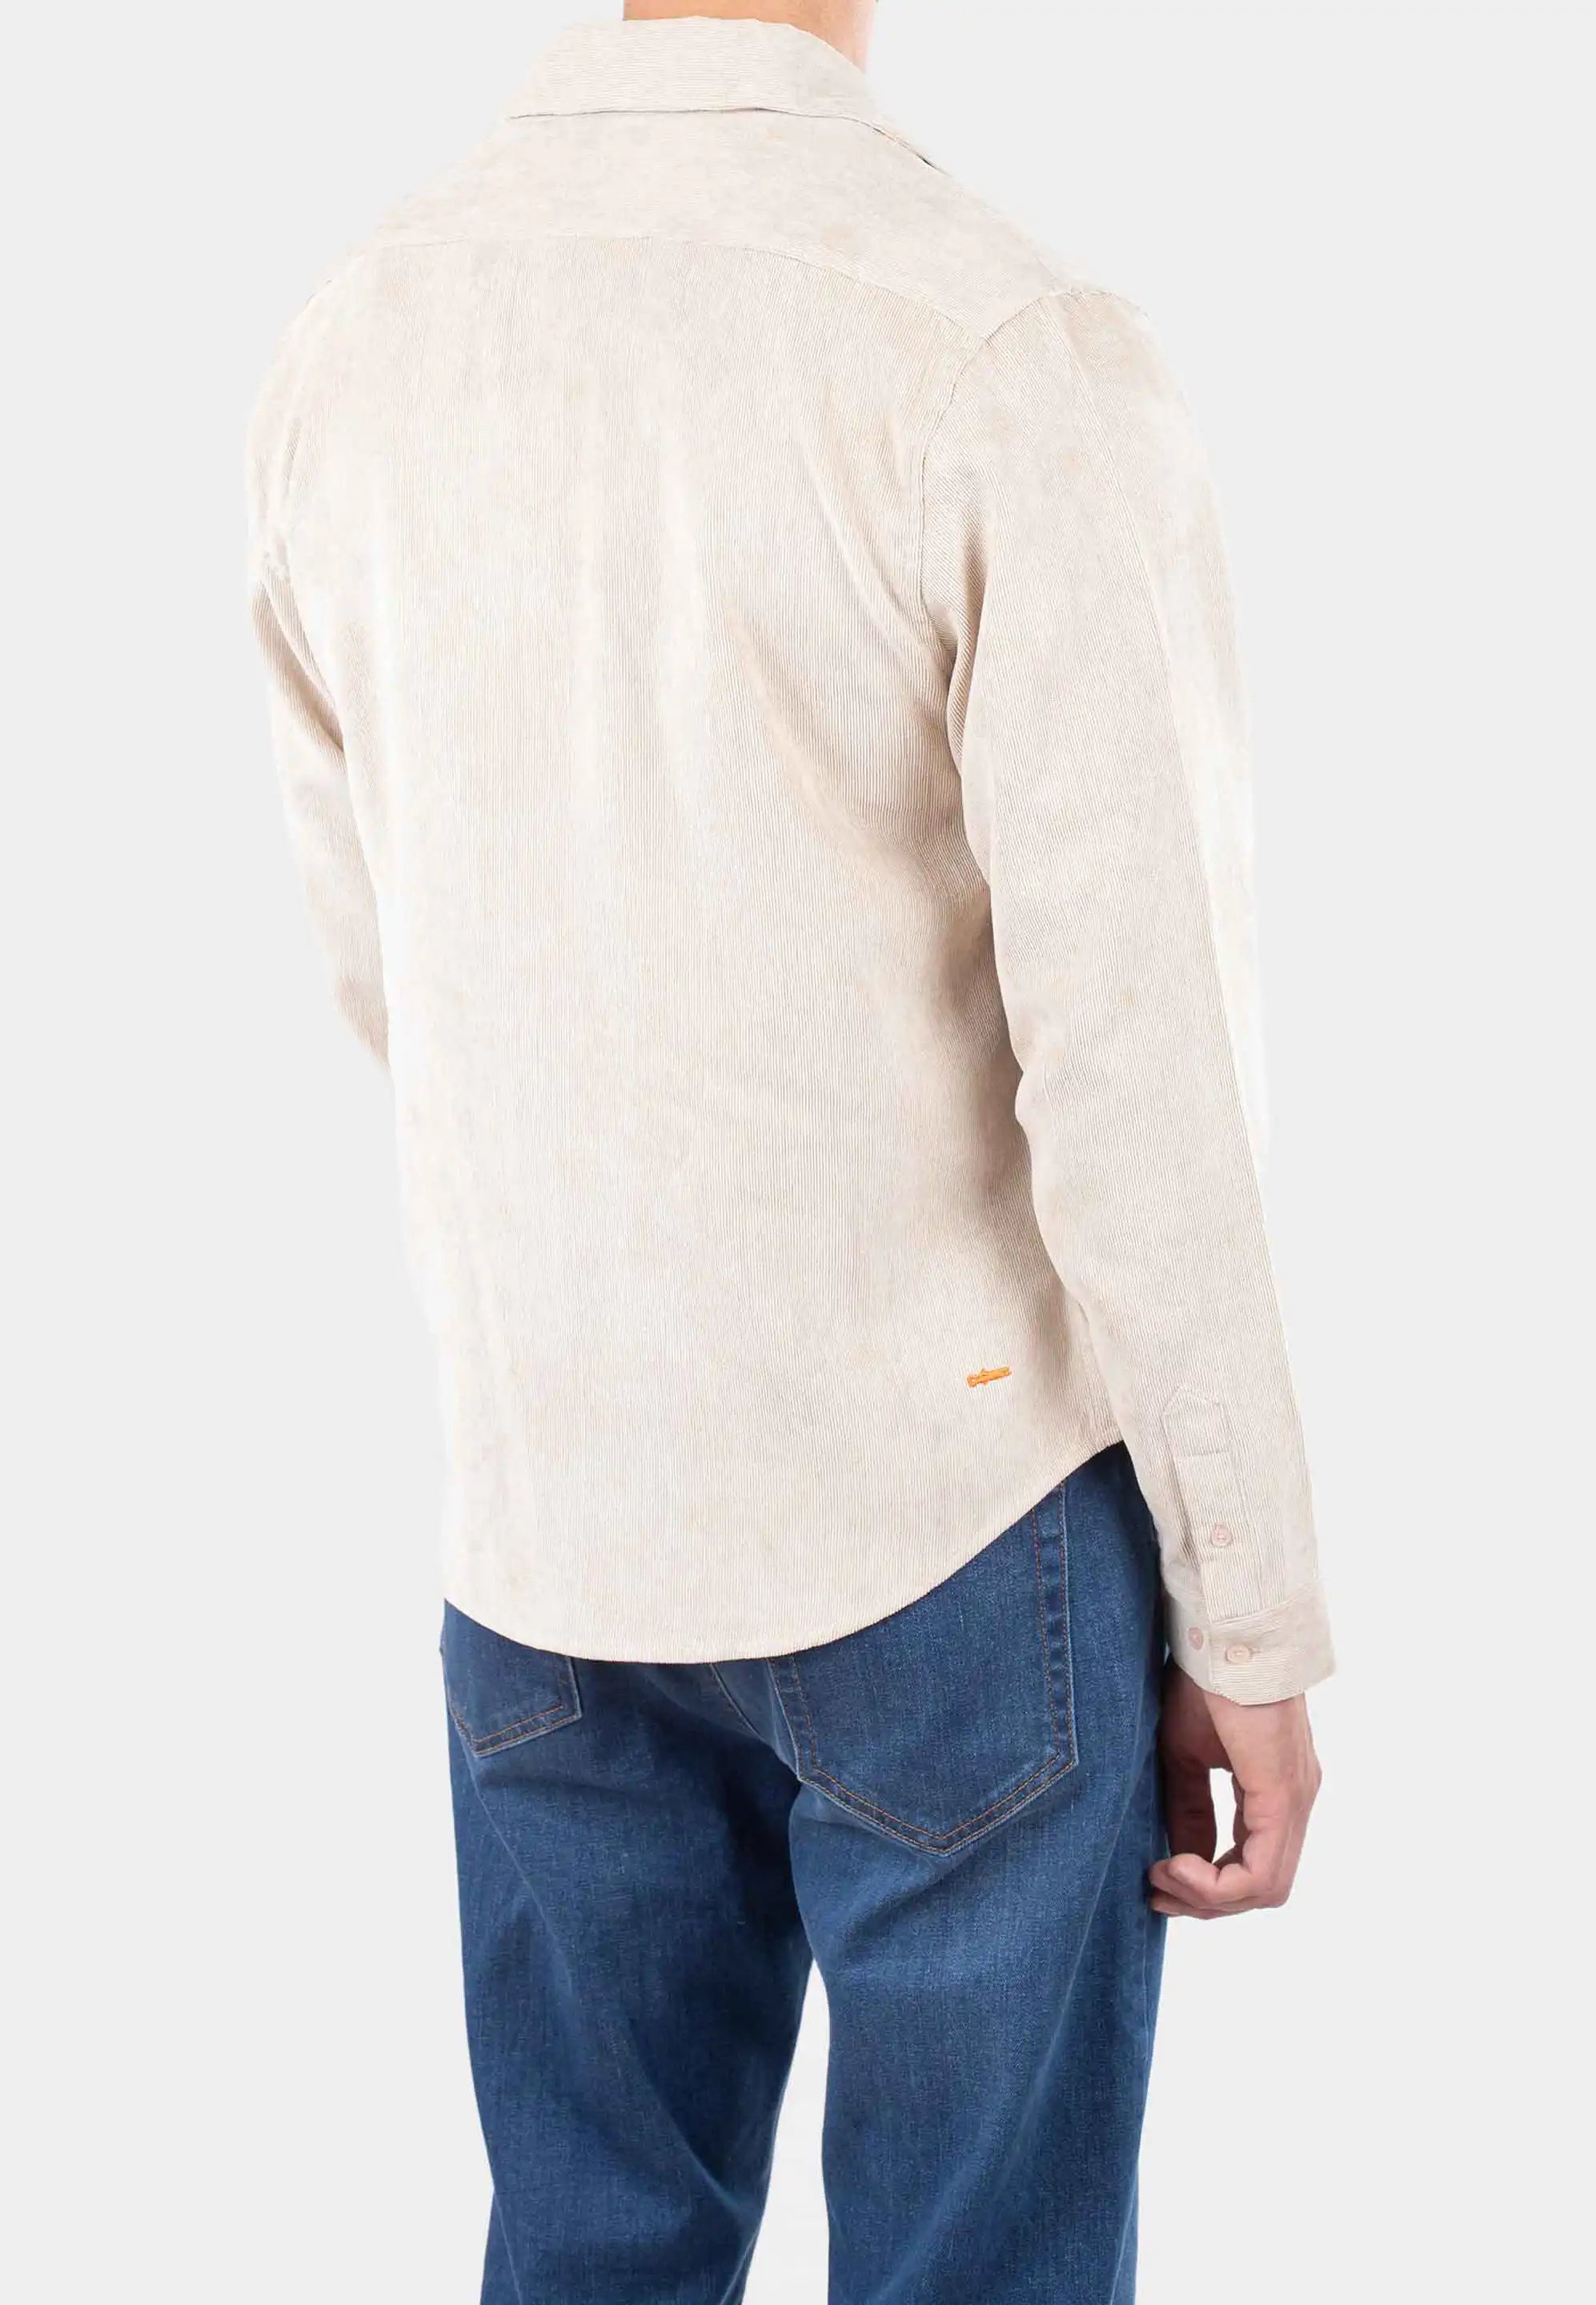 Aden cord zip shirt - Gobi sand